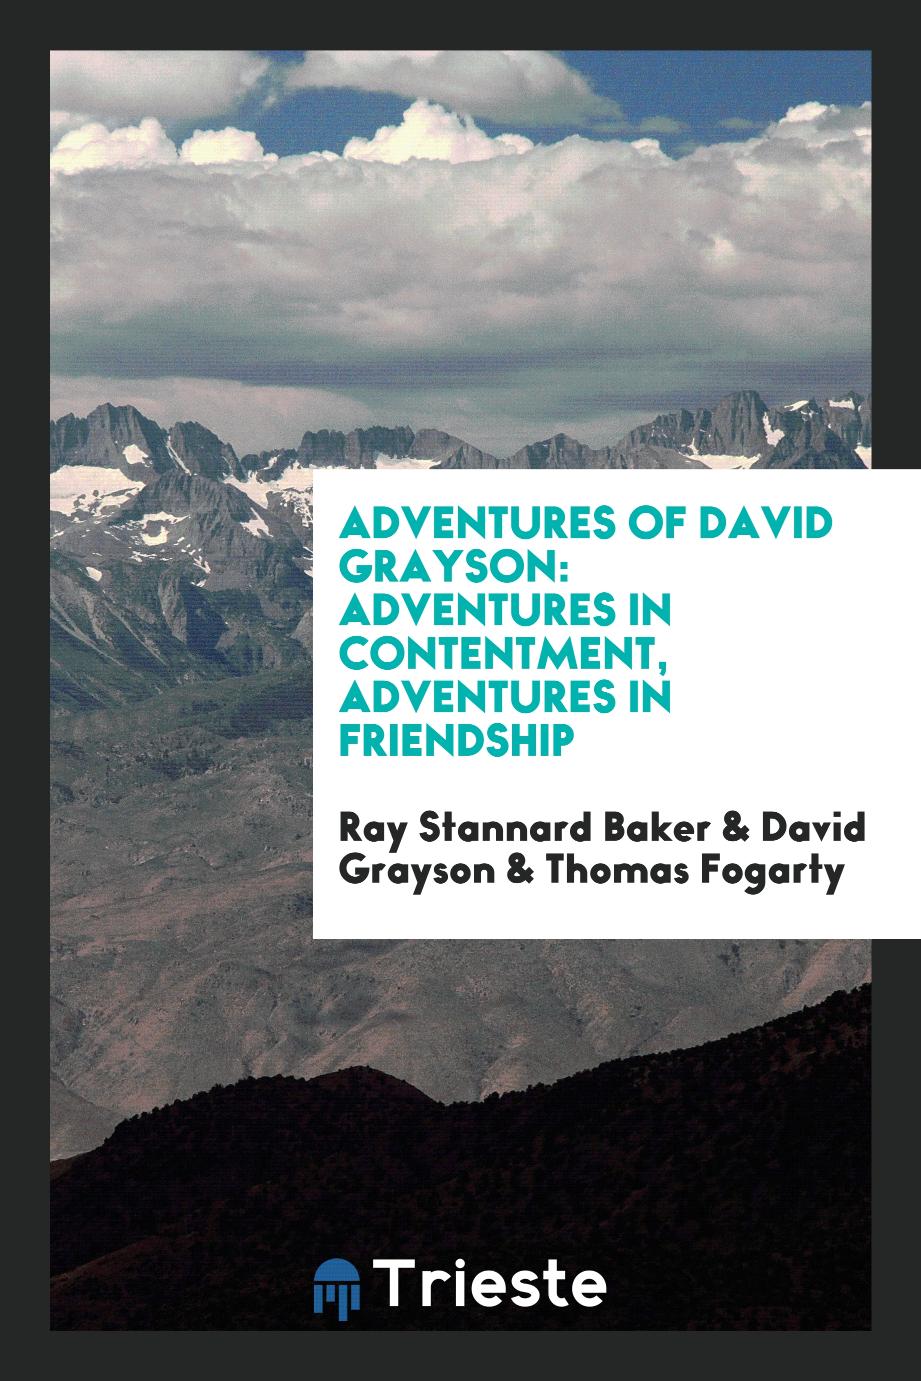 Adventures of David Grayson: Adventures in contentment, adventures in friendship